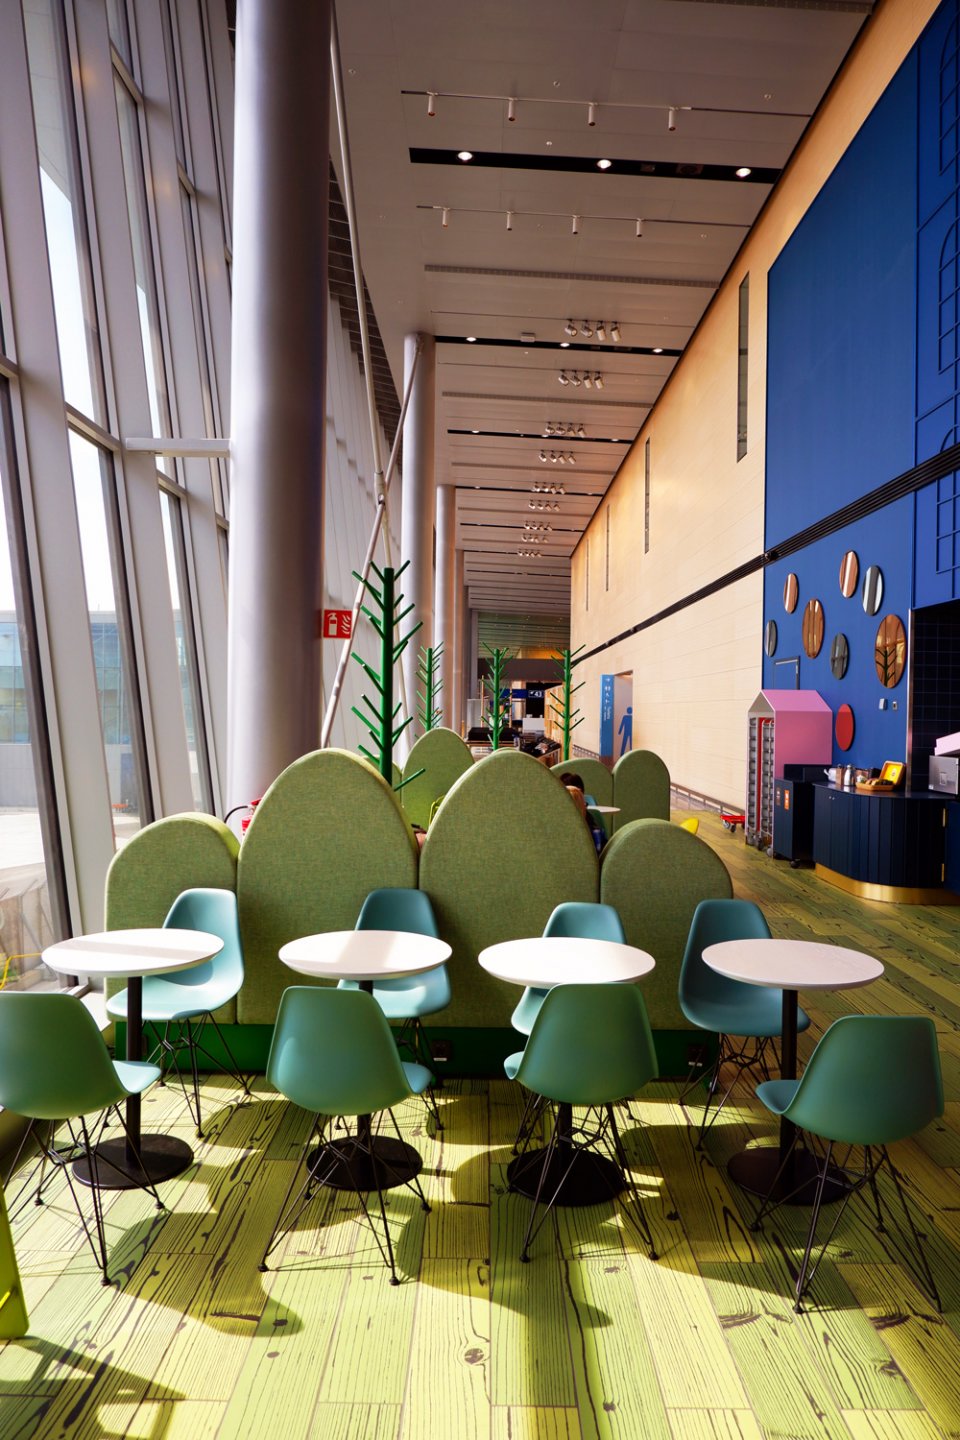 Moomin airport café